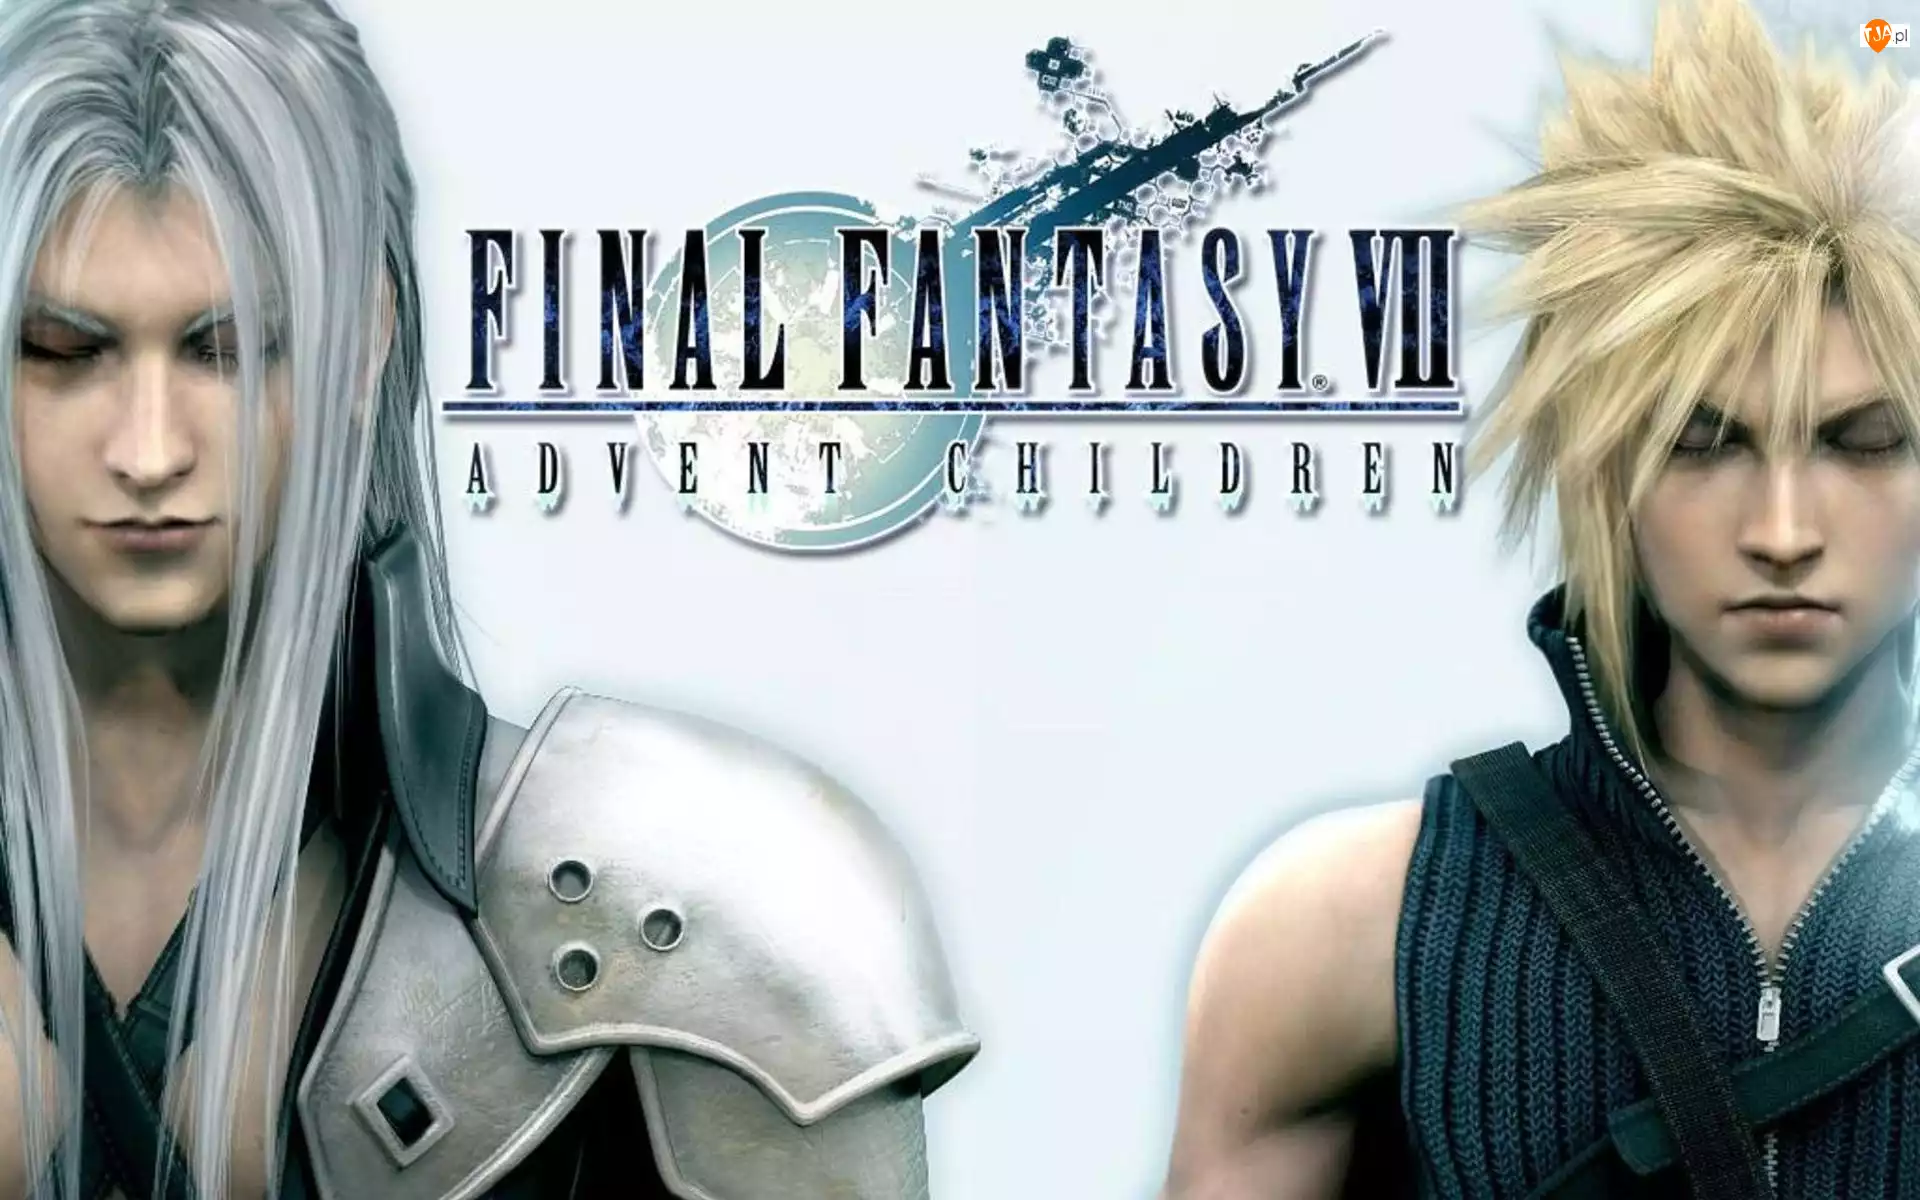 Postacie, Final Fantasy VII